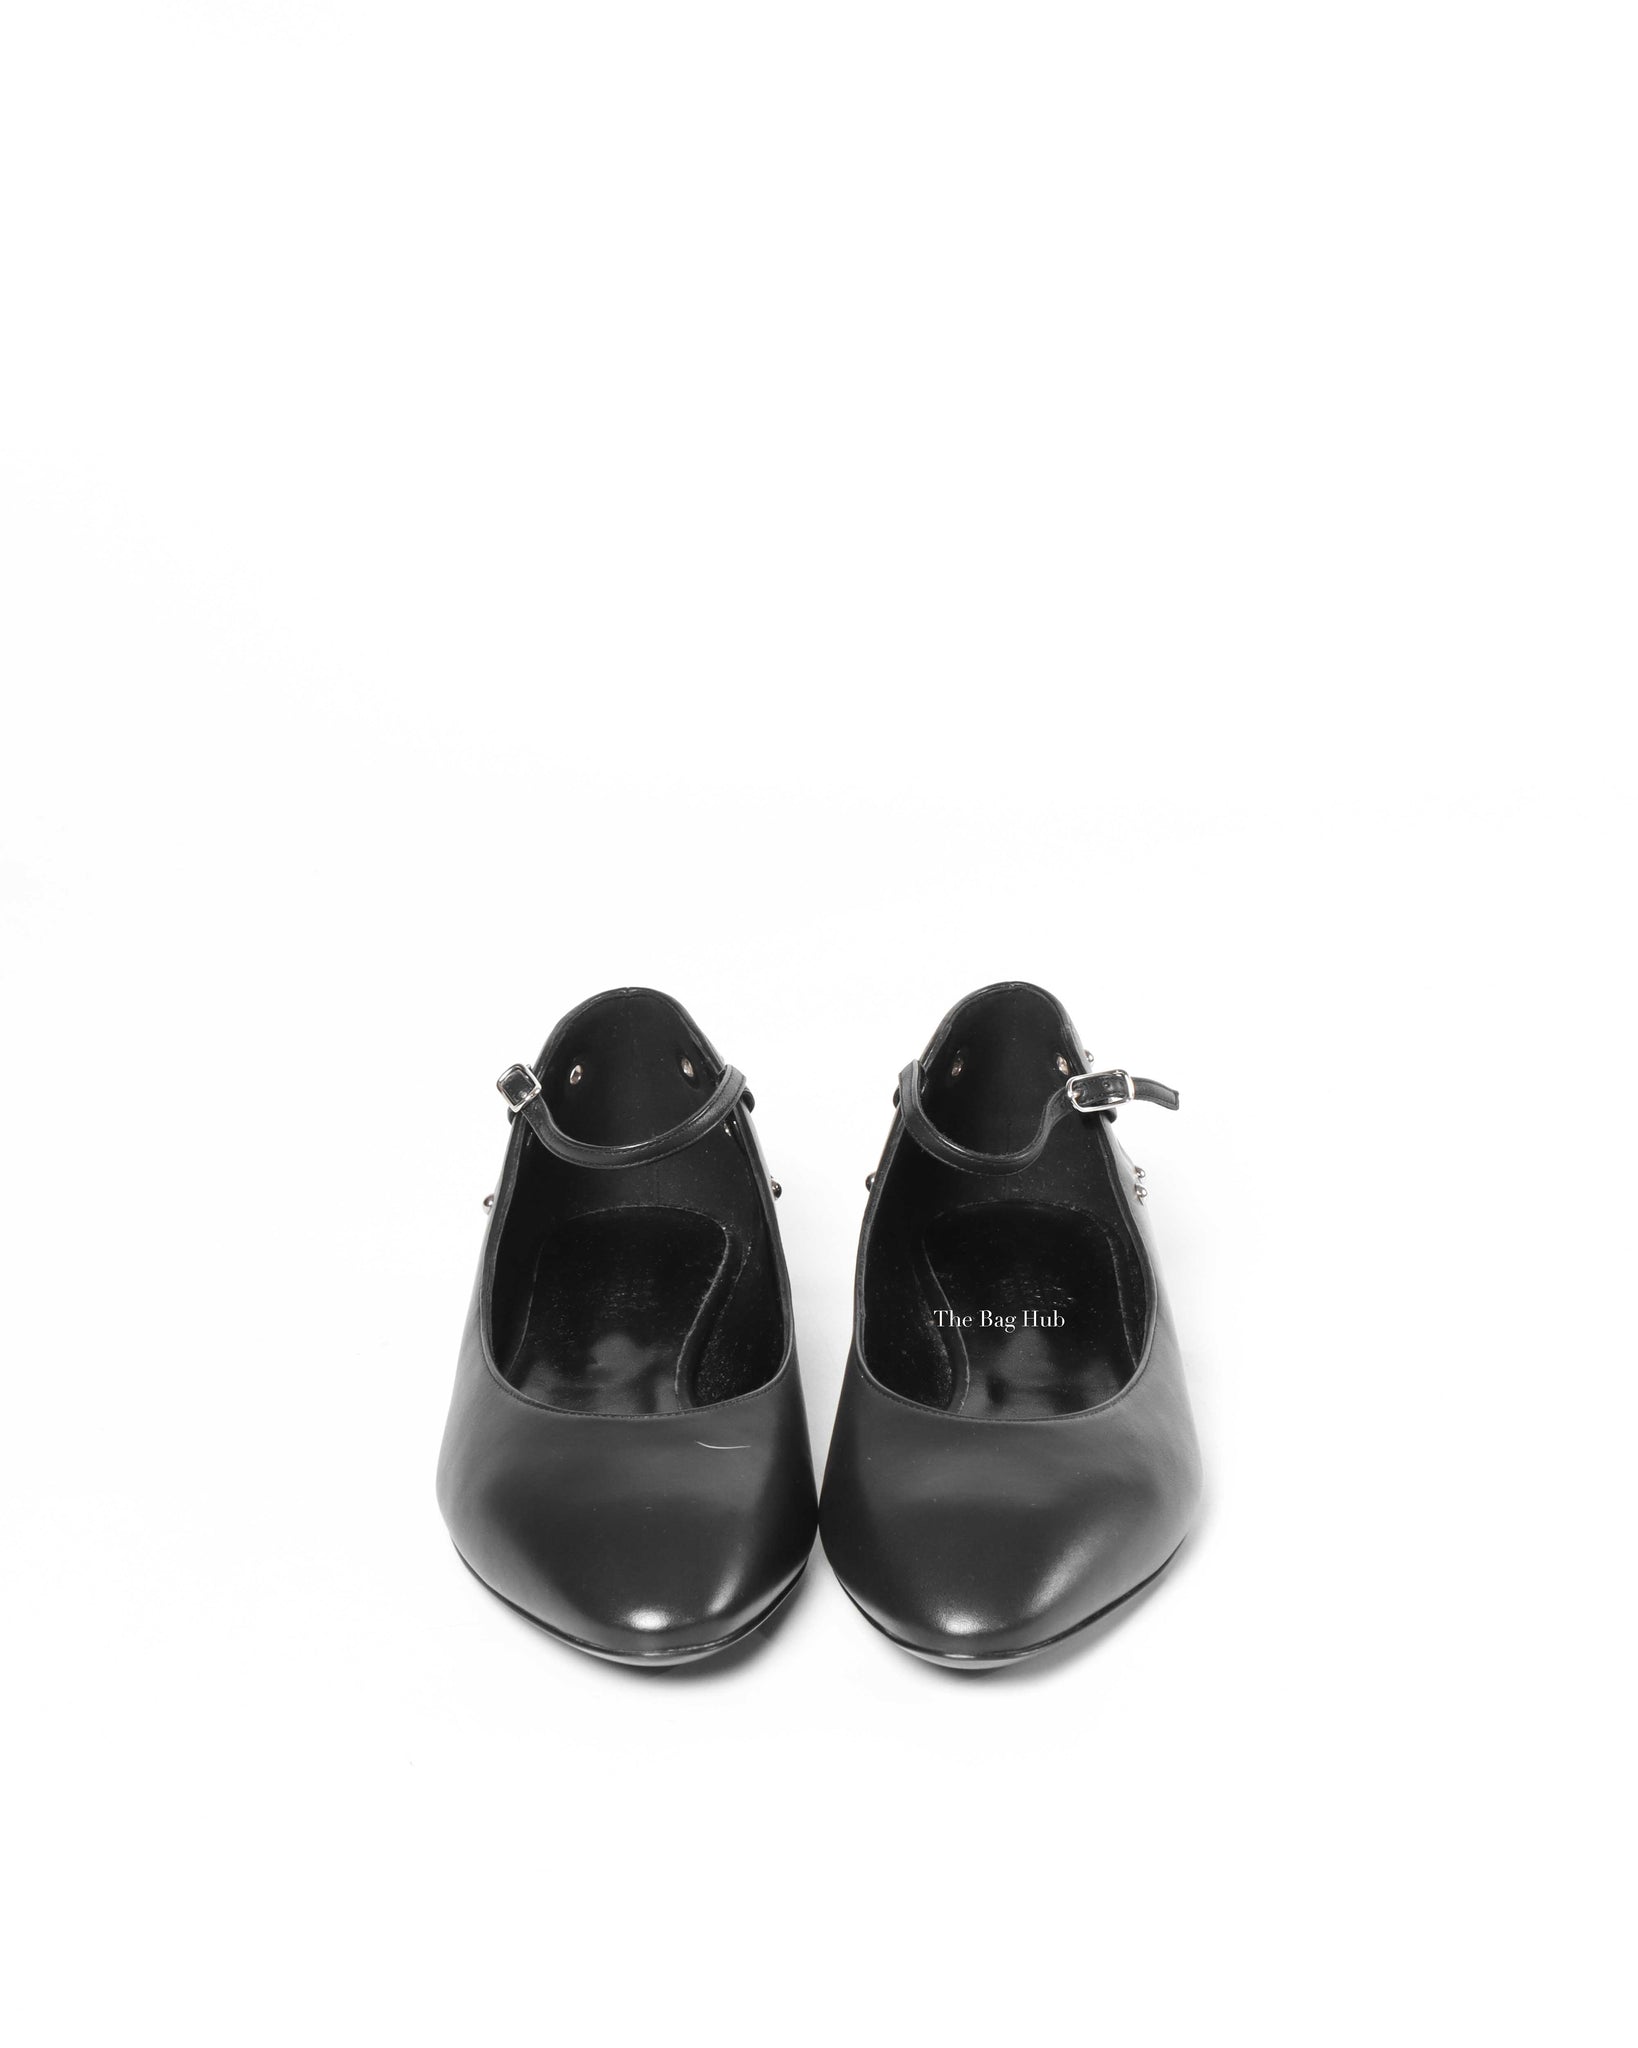 Hermes Black Leather Pepite Flats Size 39-3